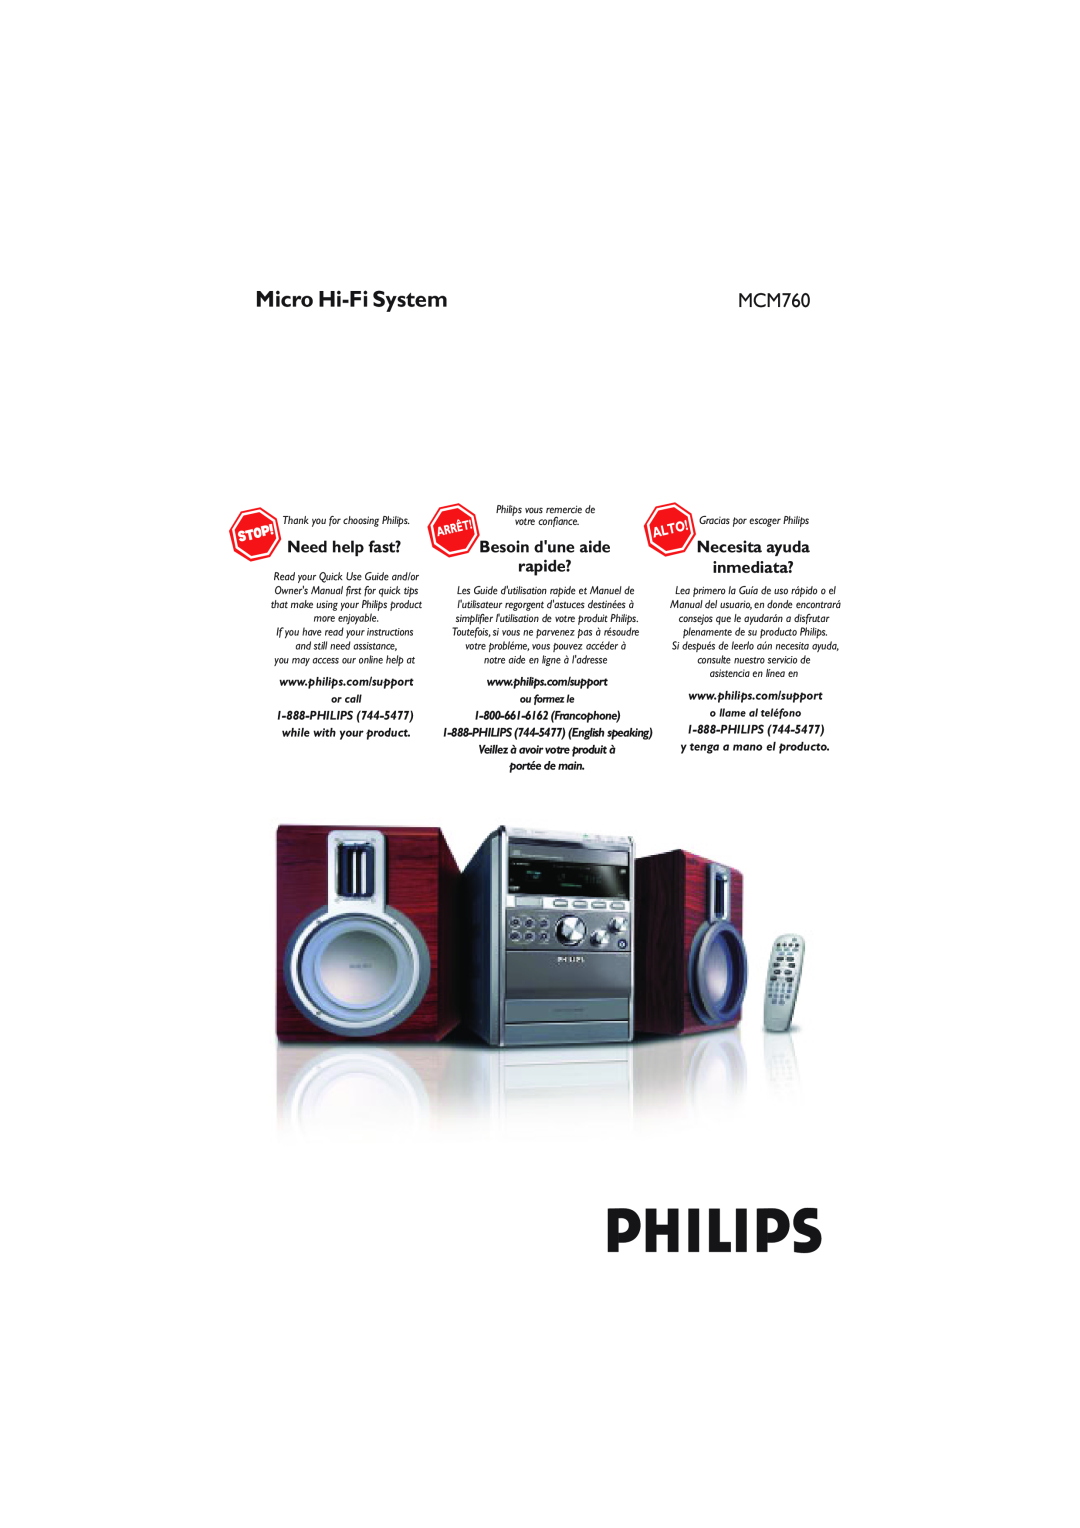 Philips MCM760 owner manual Micro Hi-FiSystem, Necesita ayuda inmediata?, votre confiance, or call, Philips, ou formez le 